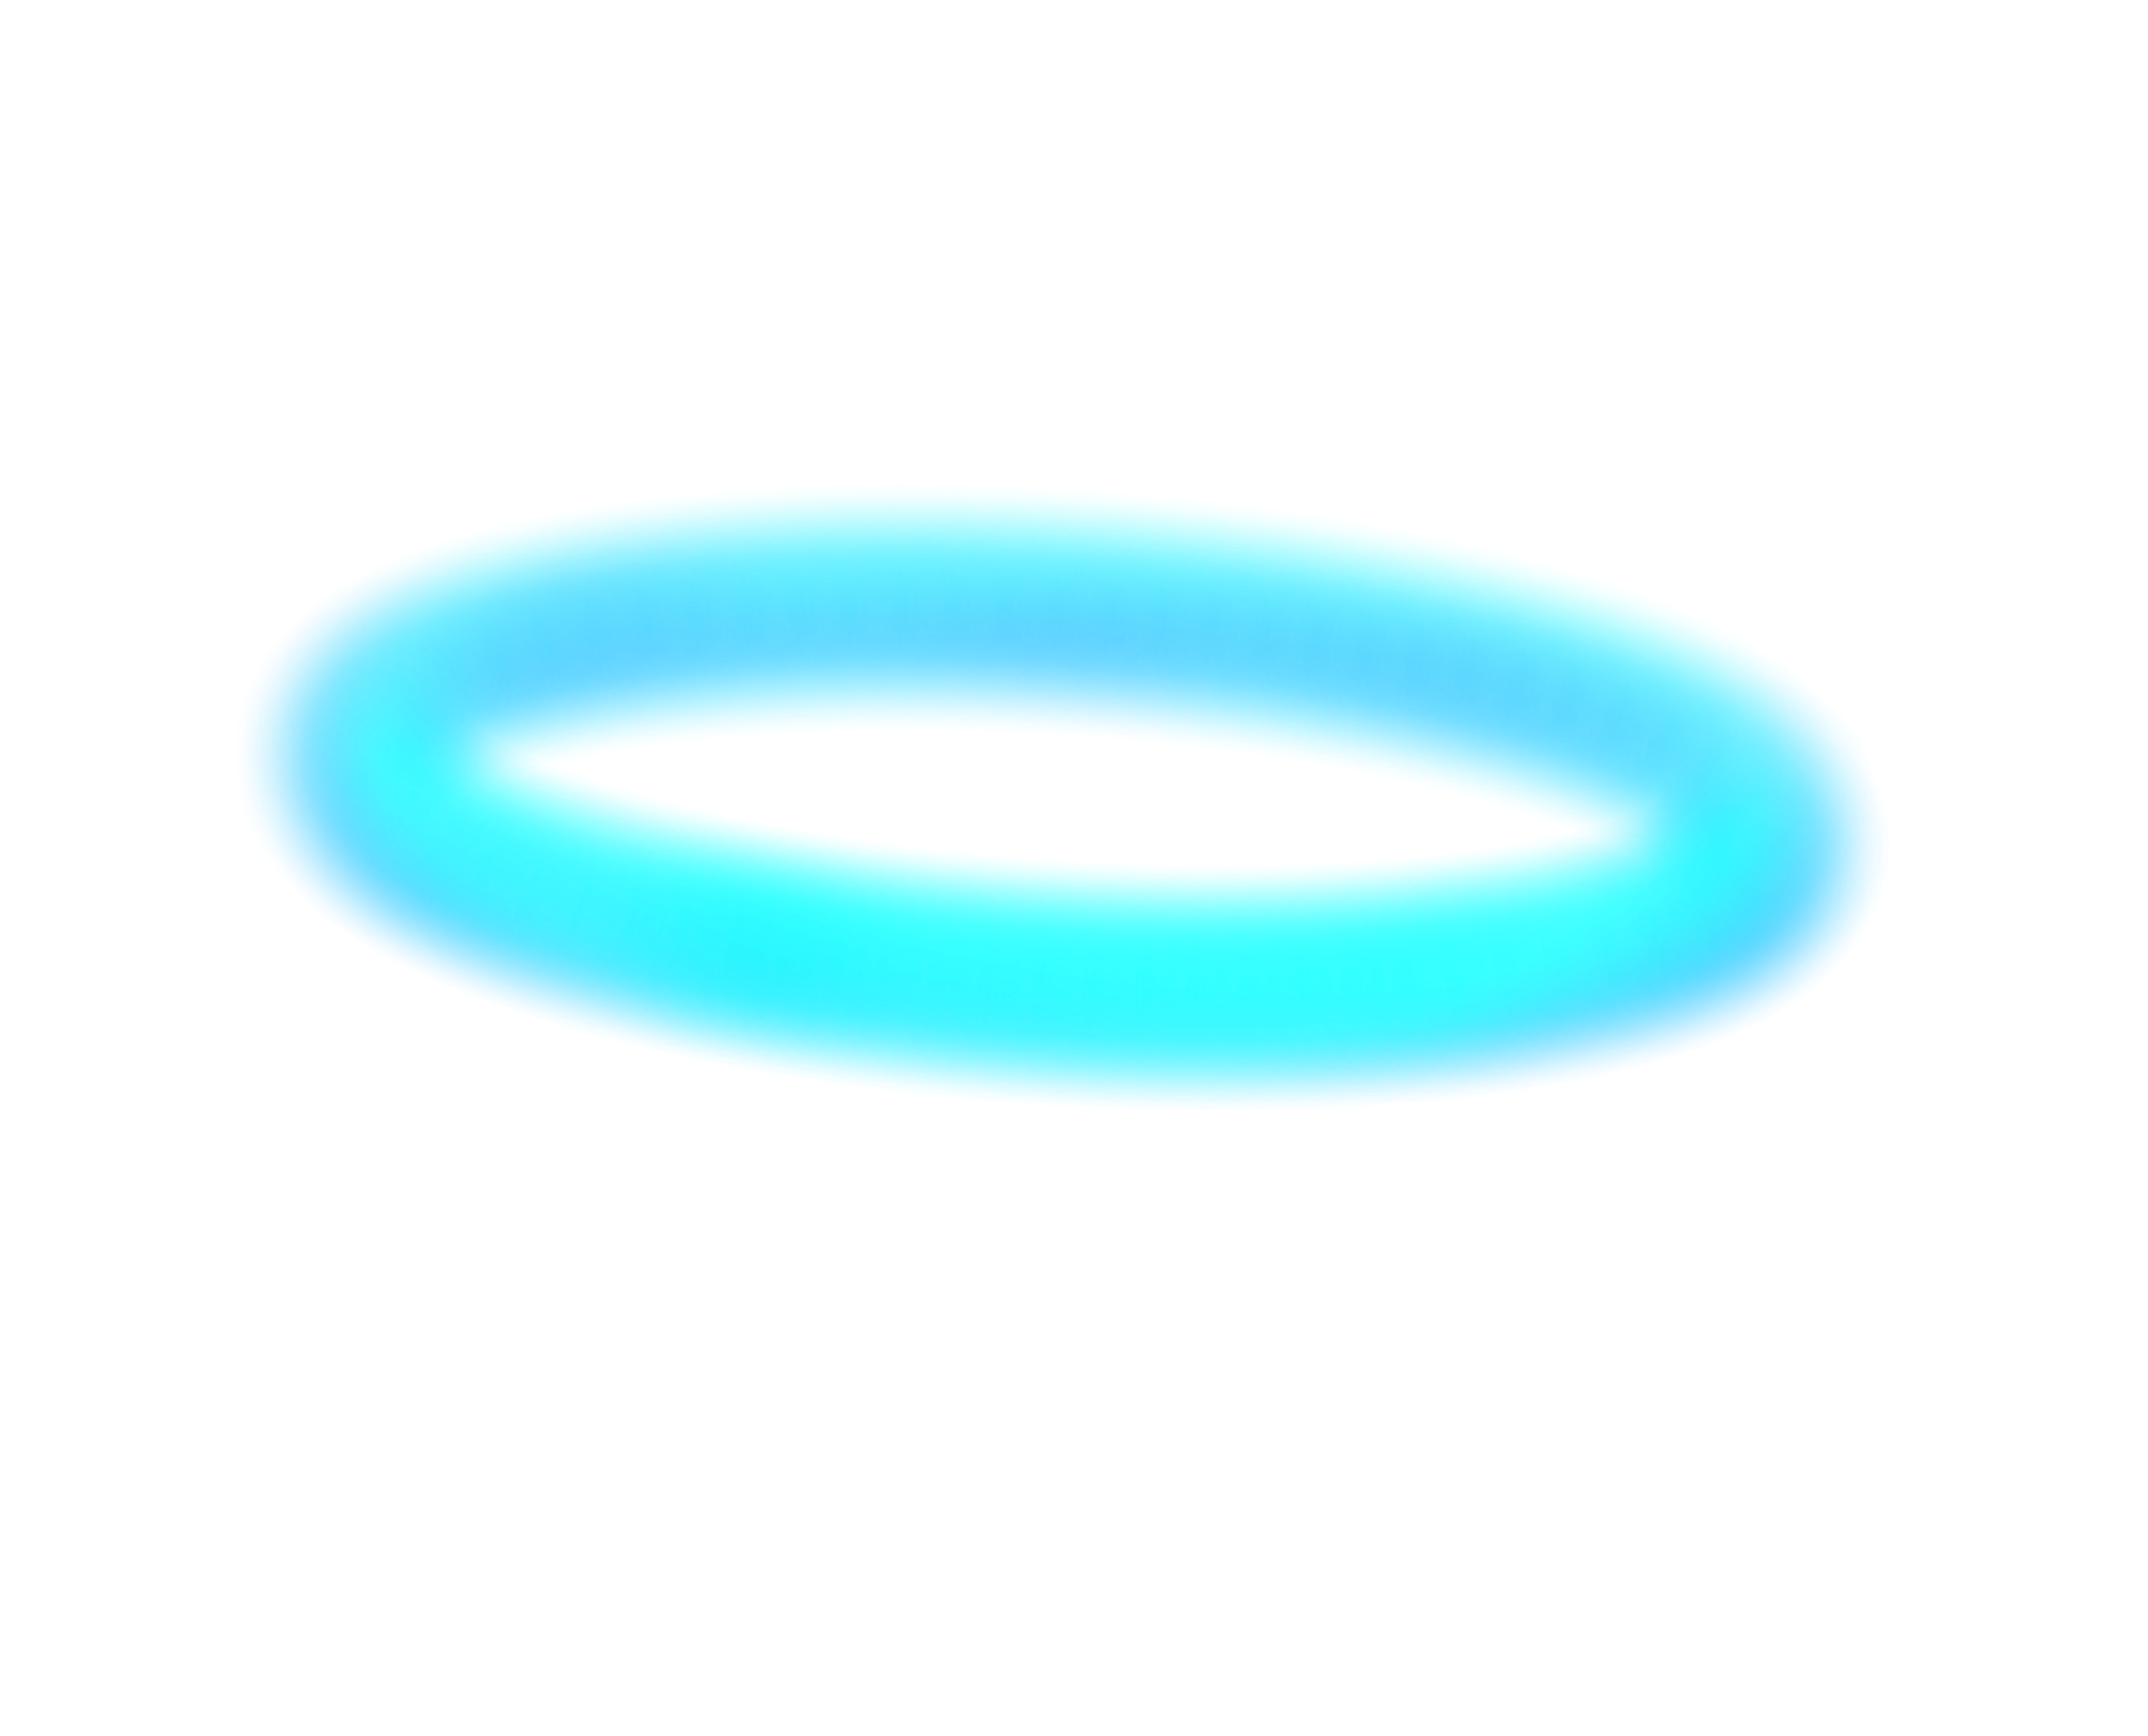 Neon Glow Ring PNG Transparent Image